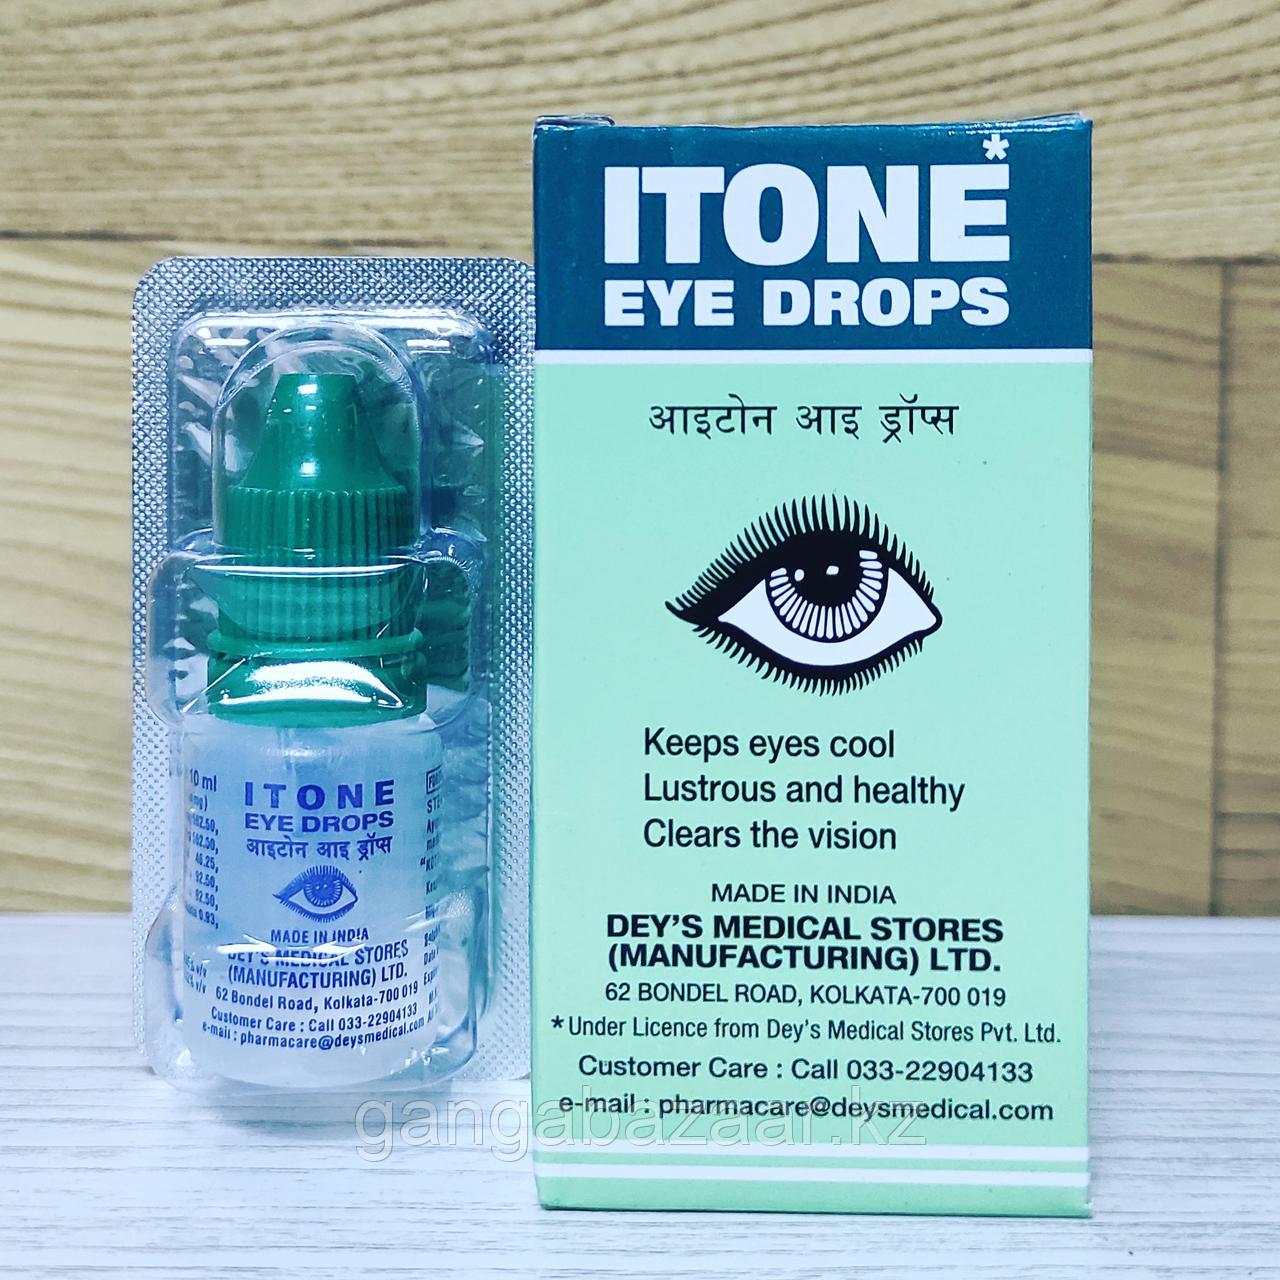 АЙТОН аюрведические глазные капли (Itone eye drops, Dey's Medical Stores) 10 мл